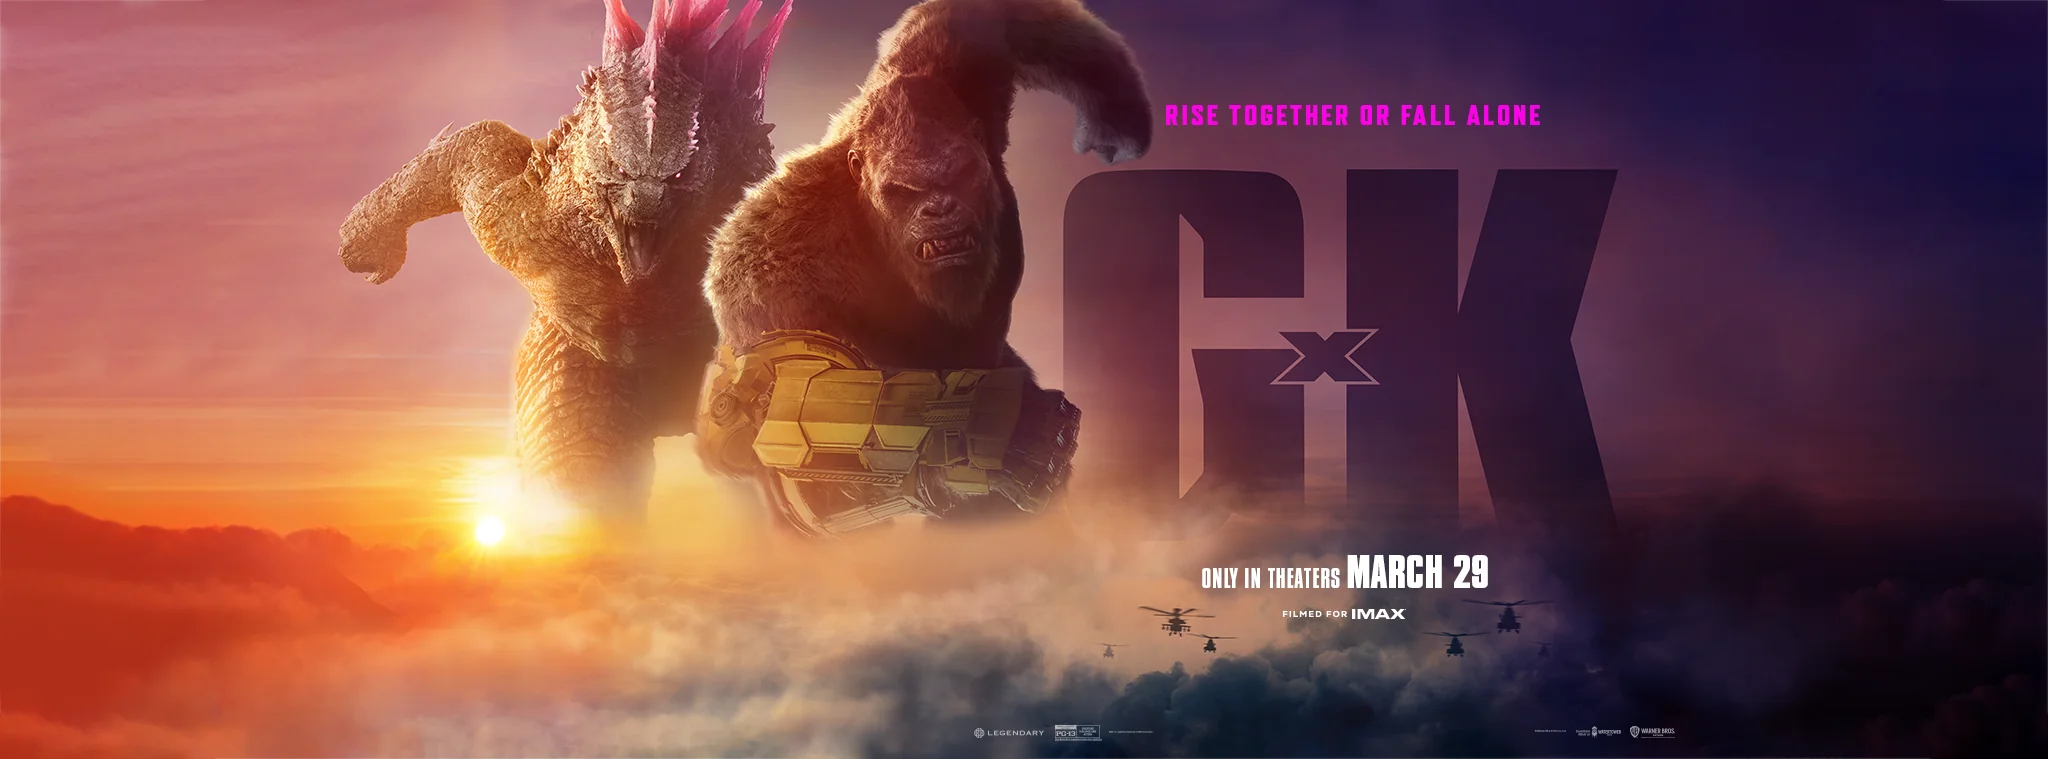 Godzilla X Kong New Empire New Trailer and Reaction.